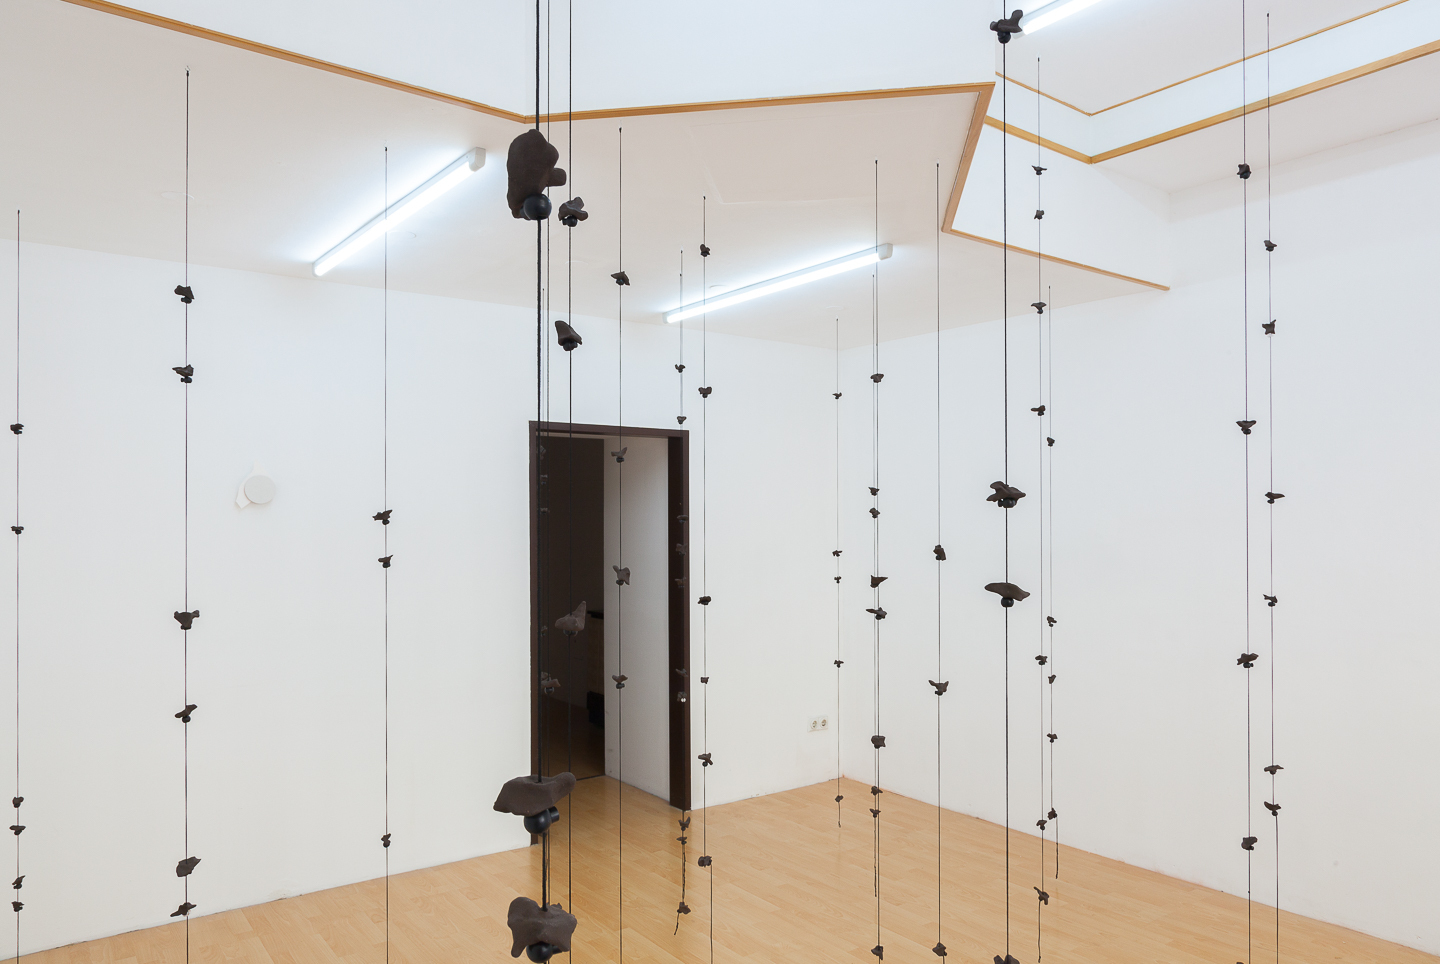 Jan Erbelding, Vague Intellectual Pleasures, 2021, installation view, Loggia Vienna